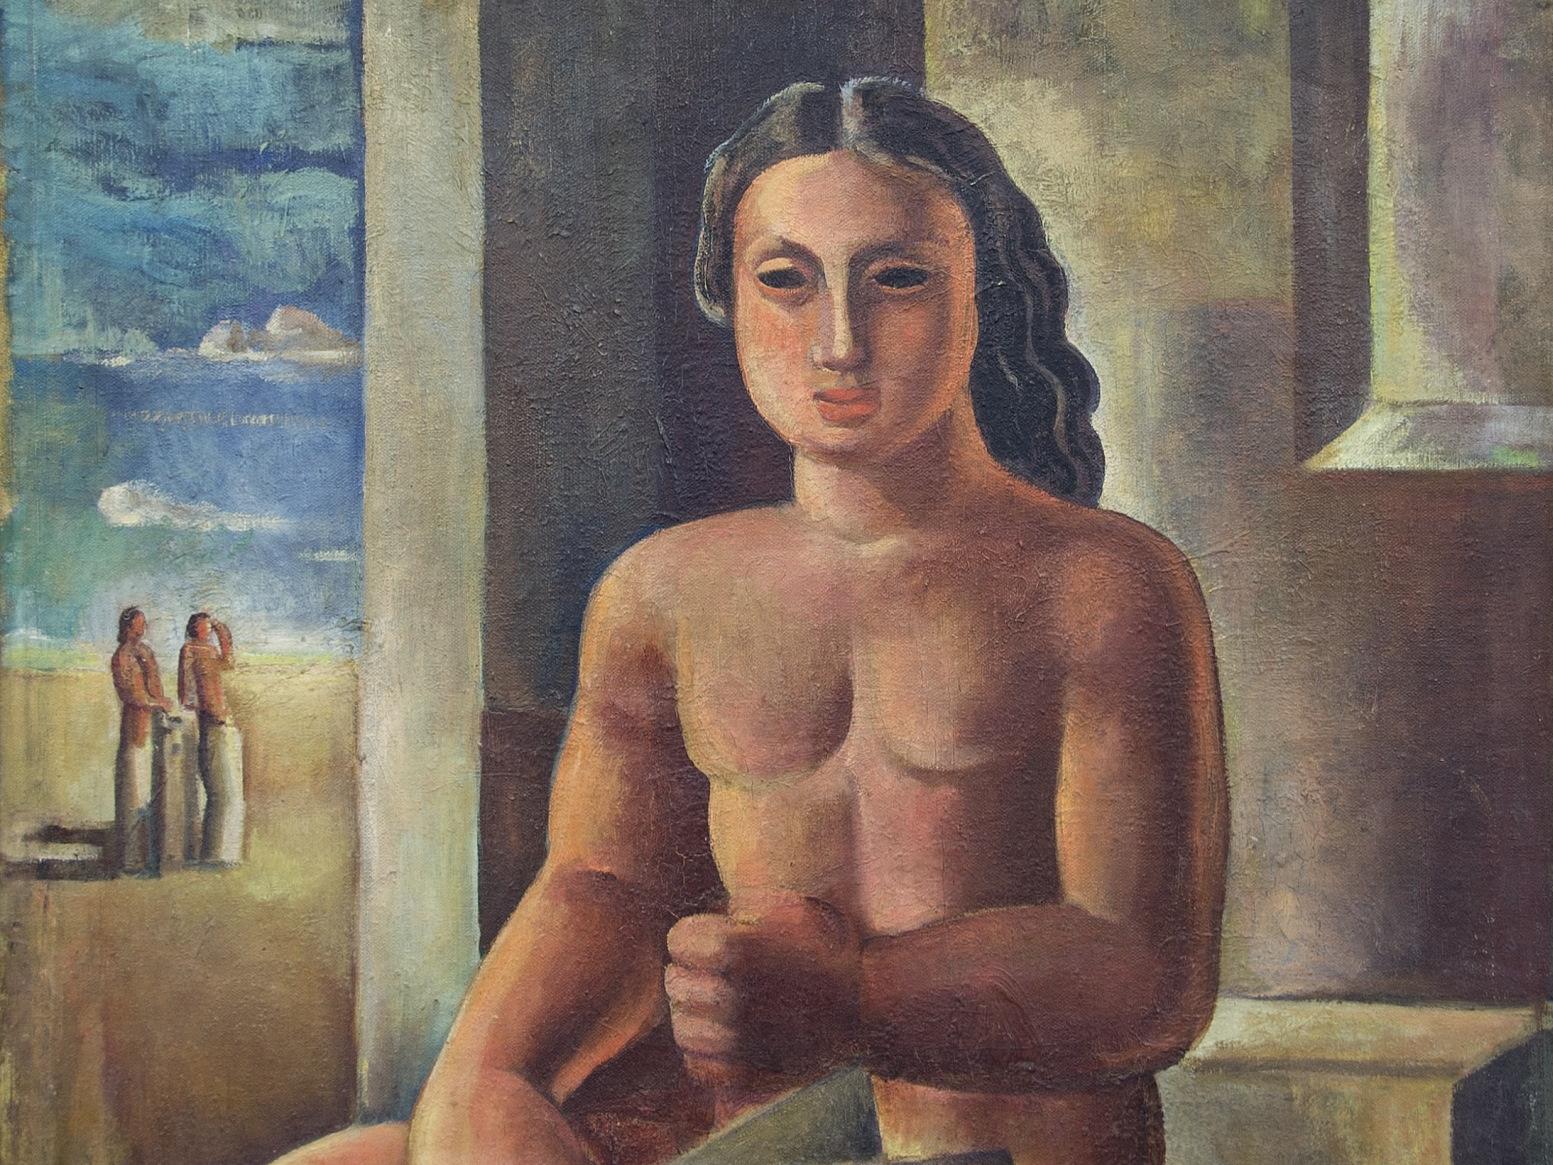 Pintura con figura humana desnuda